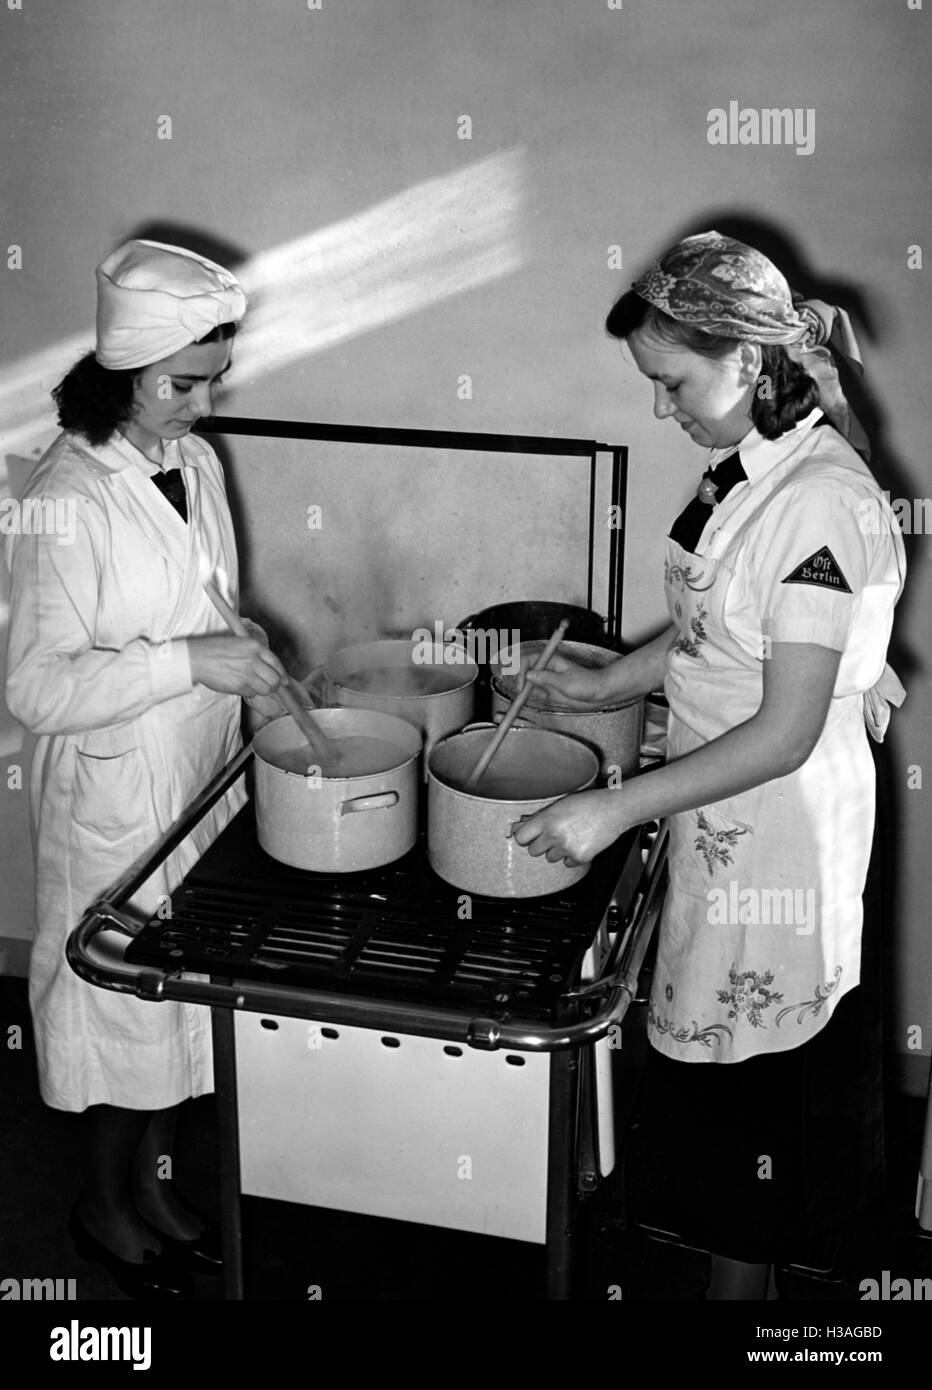 Members of the BDM-Werk Glaube und Schoenheit (BDM-Work, Faith and Beauty Society) when baking, Berlin 1941 Stock Photo